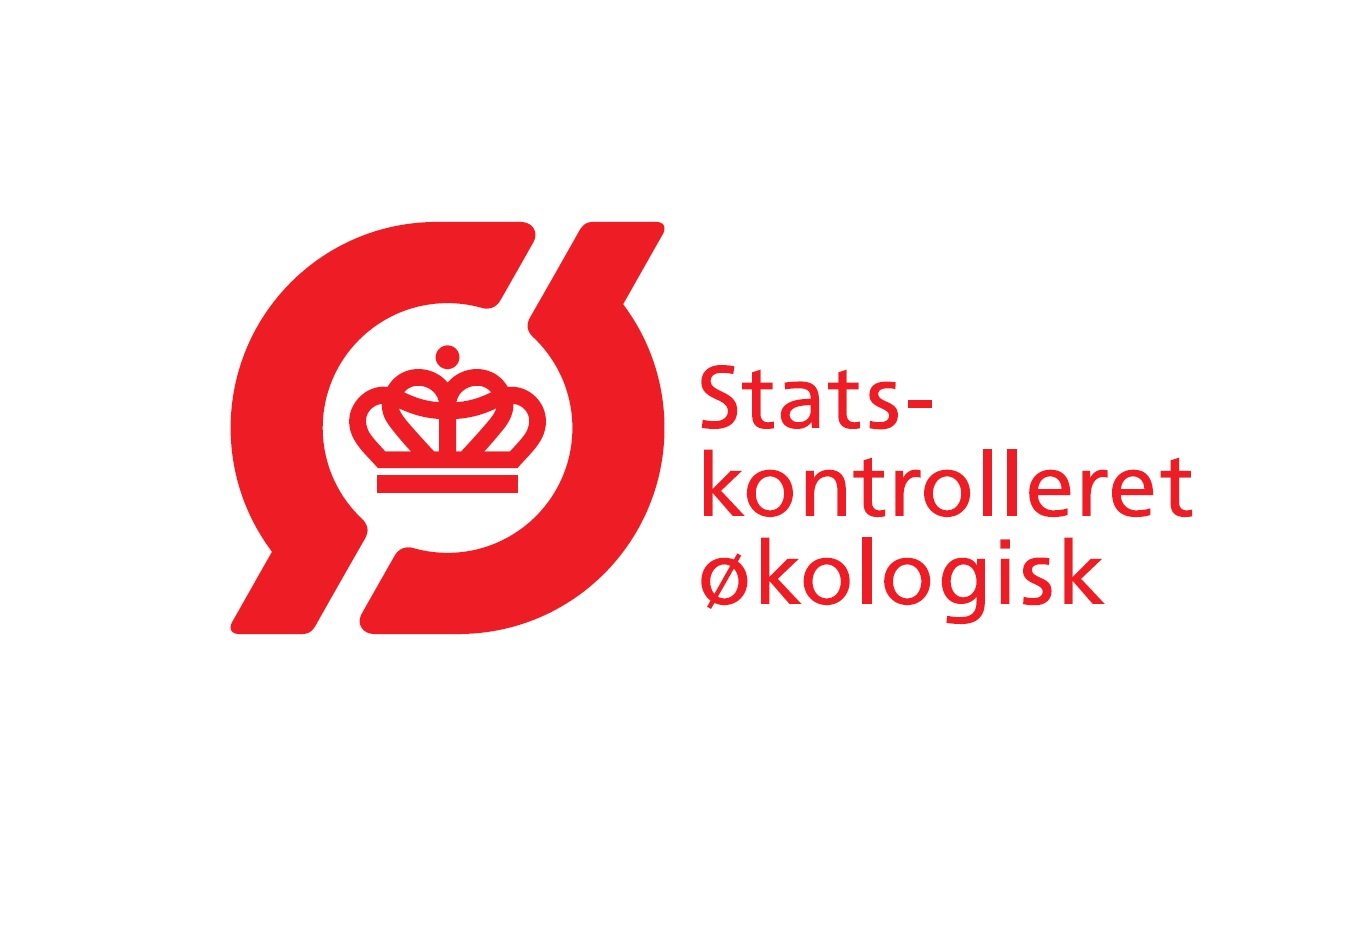 Logo_Statskontrolleret Økologisk_Rødt_JPG.jpg